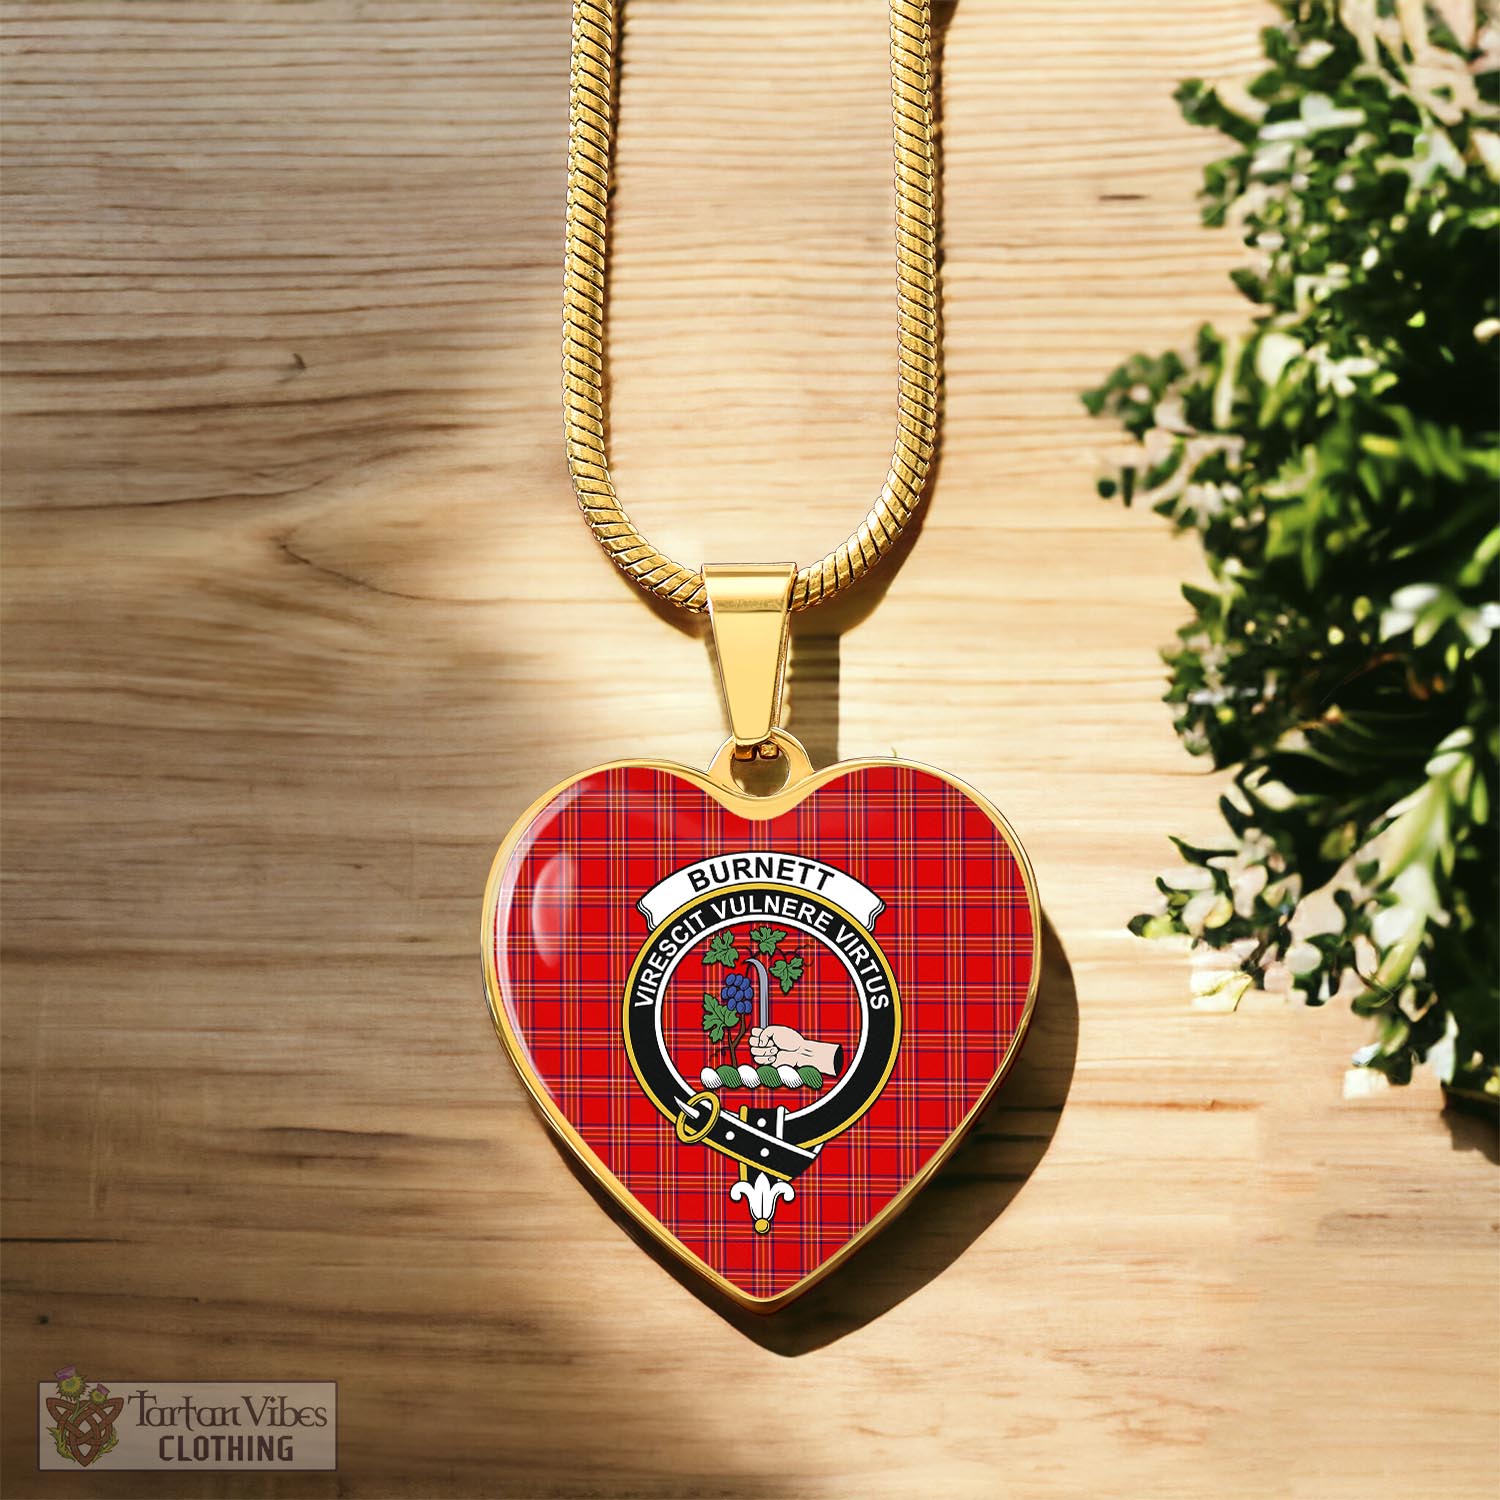 Tartan Vibes Clothing Burnett Modern Tartan Heart Necklace with Family Crest